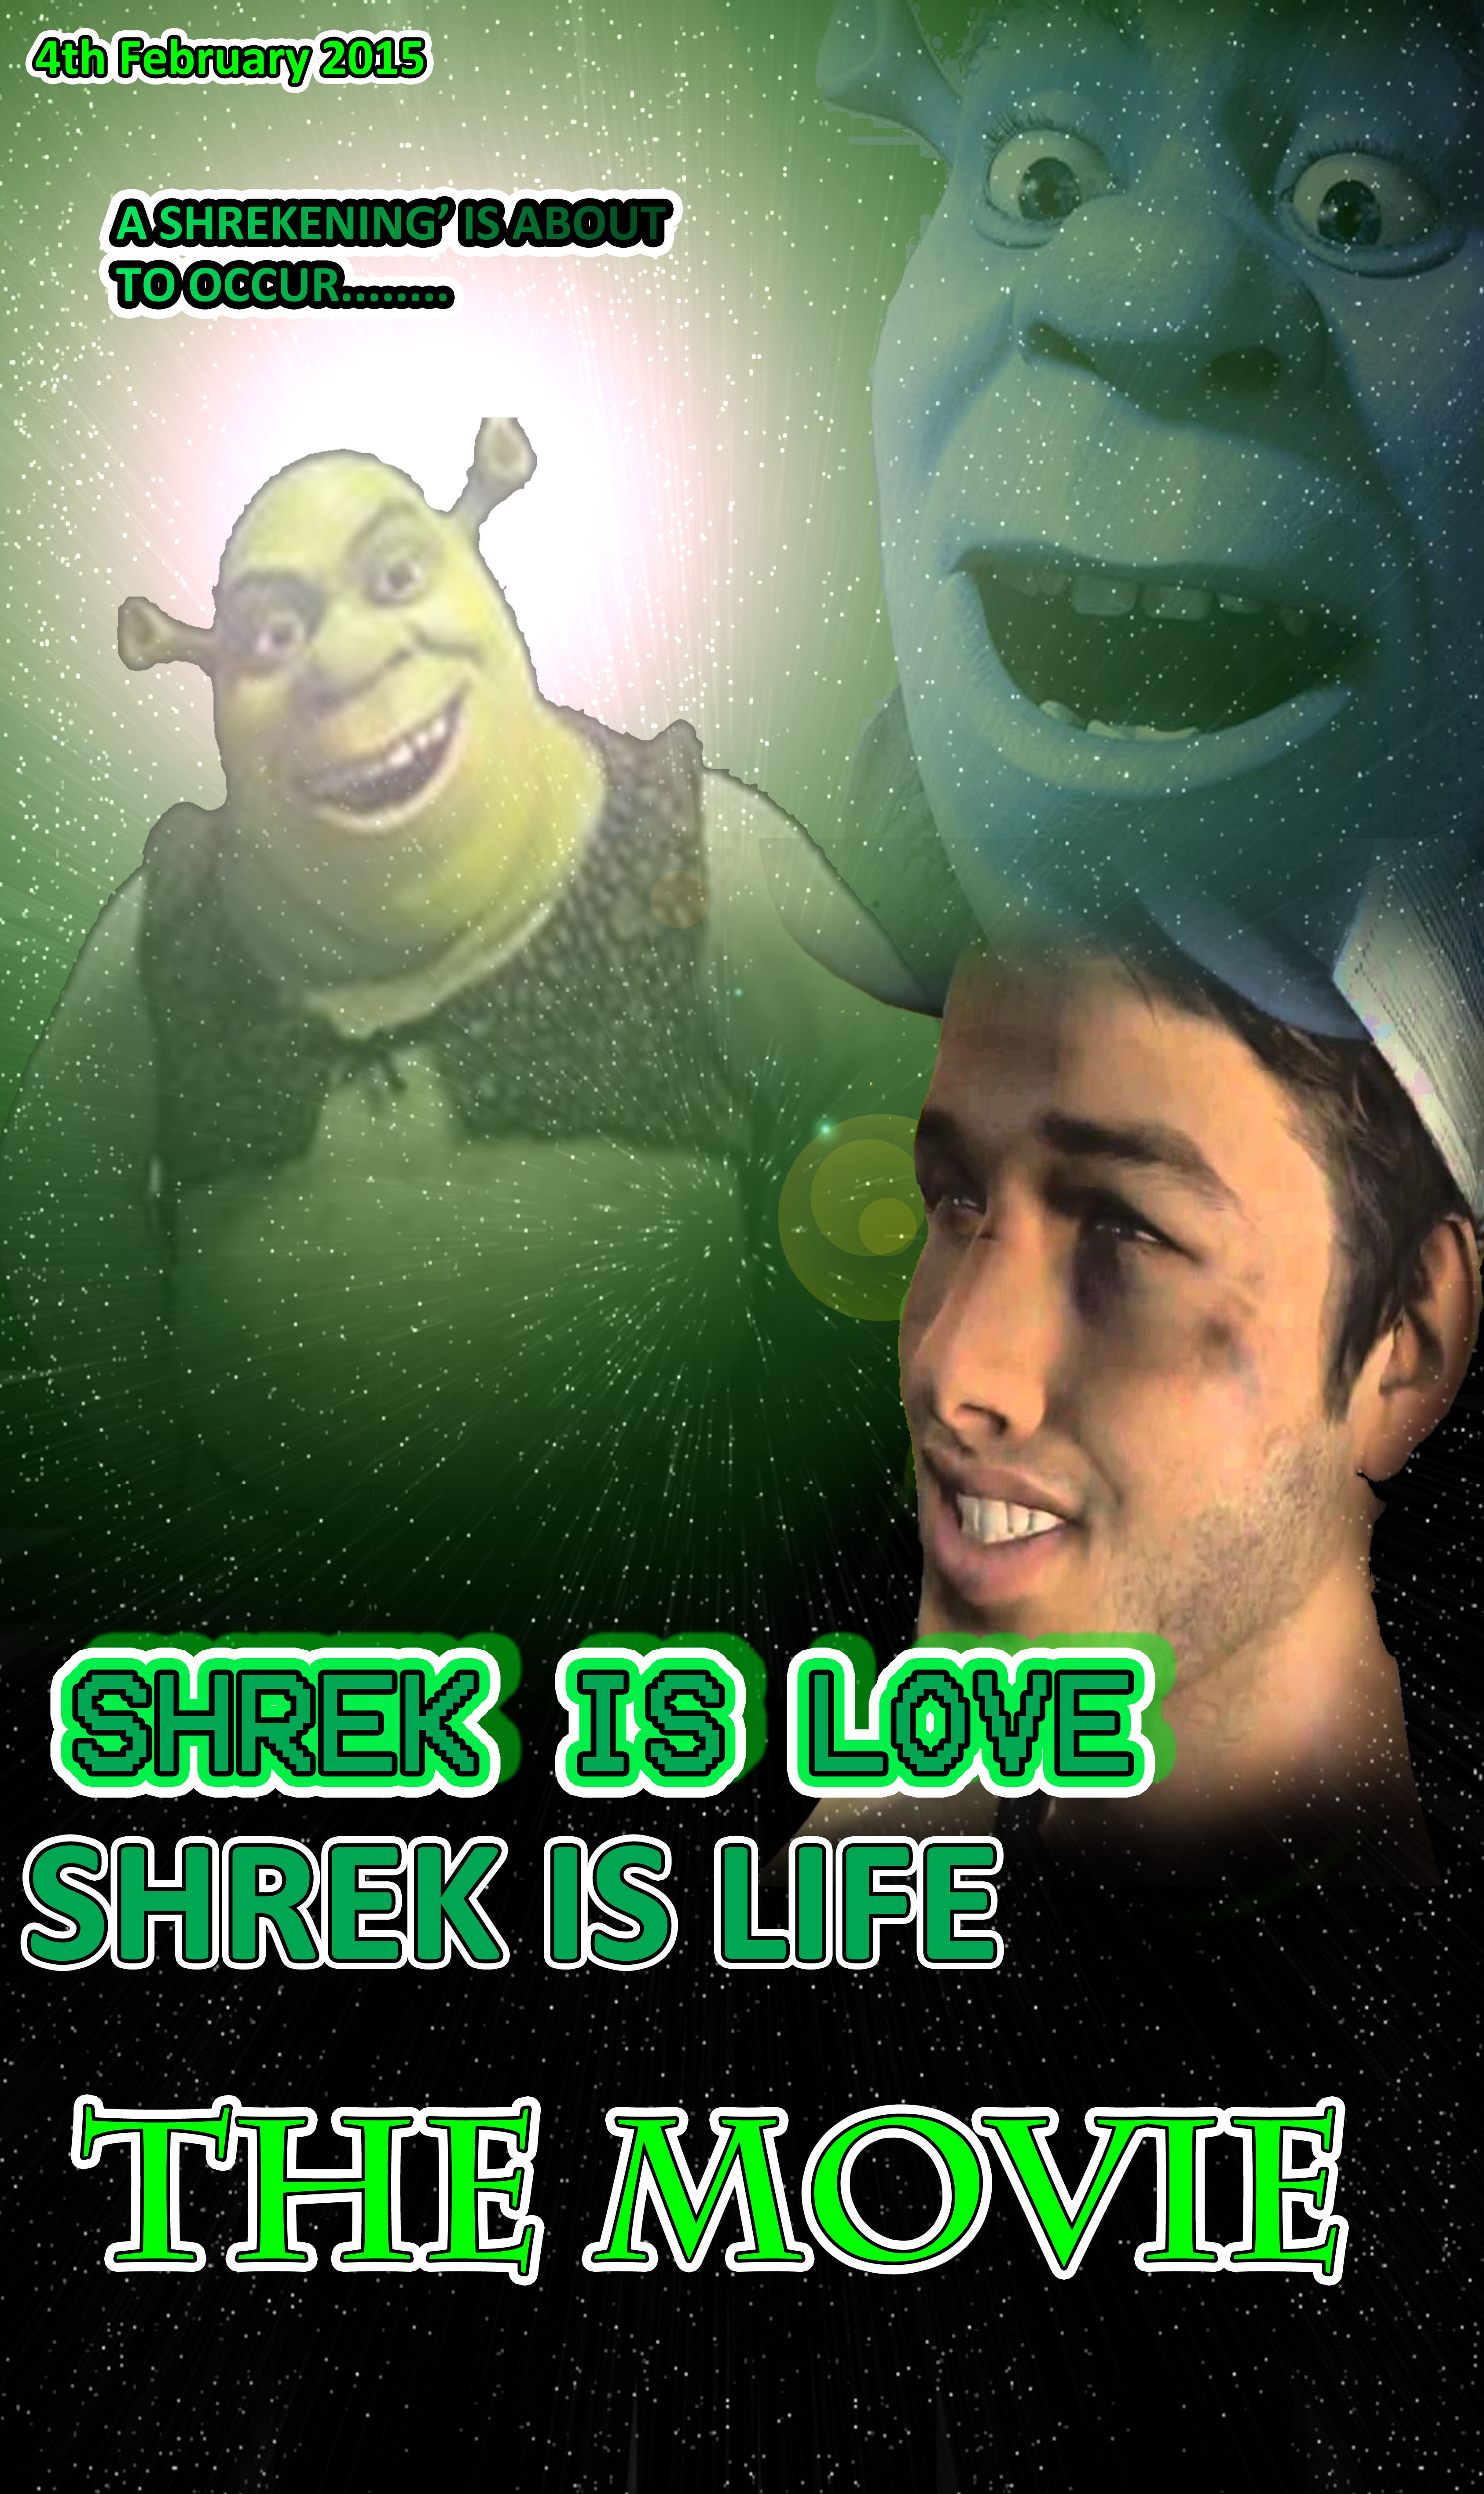 Shrek is love Shrek is Life! by balabinobim on DeviantArt